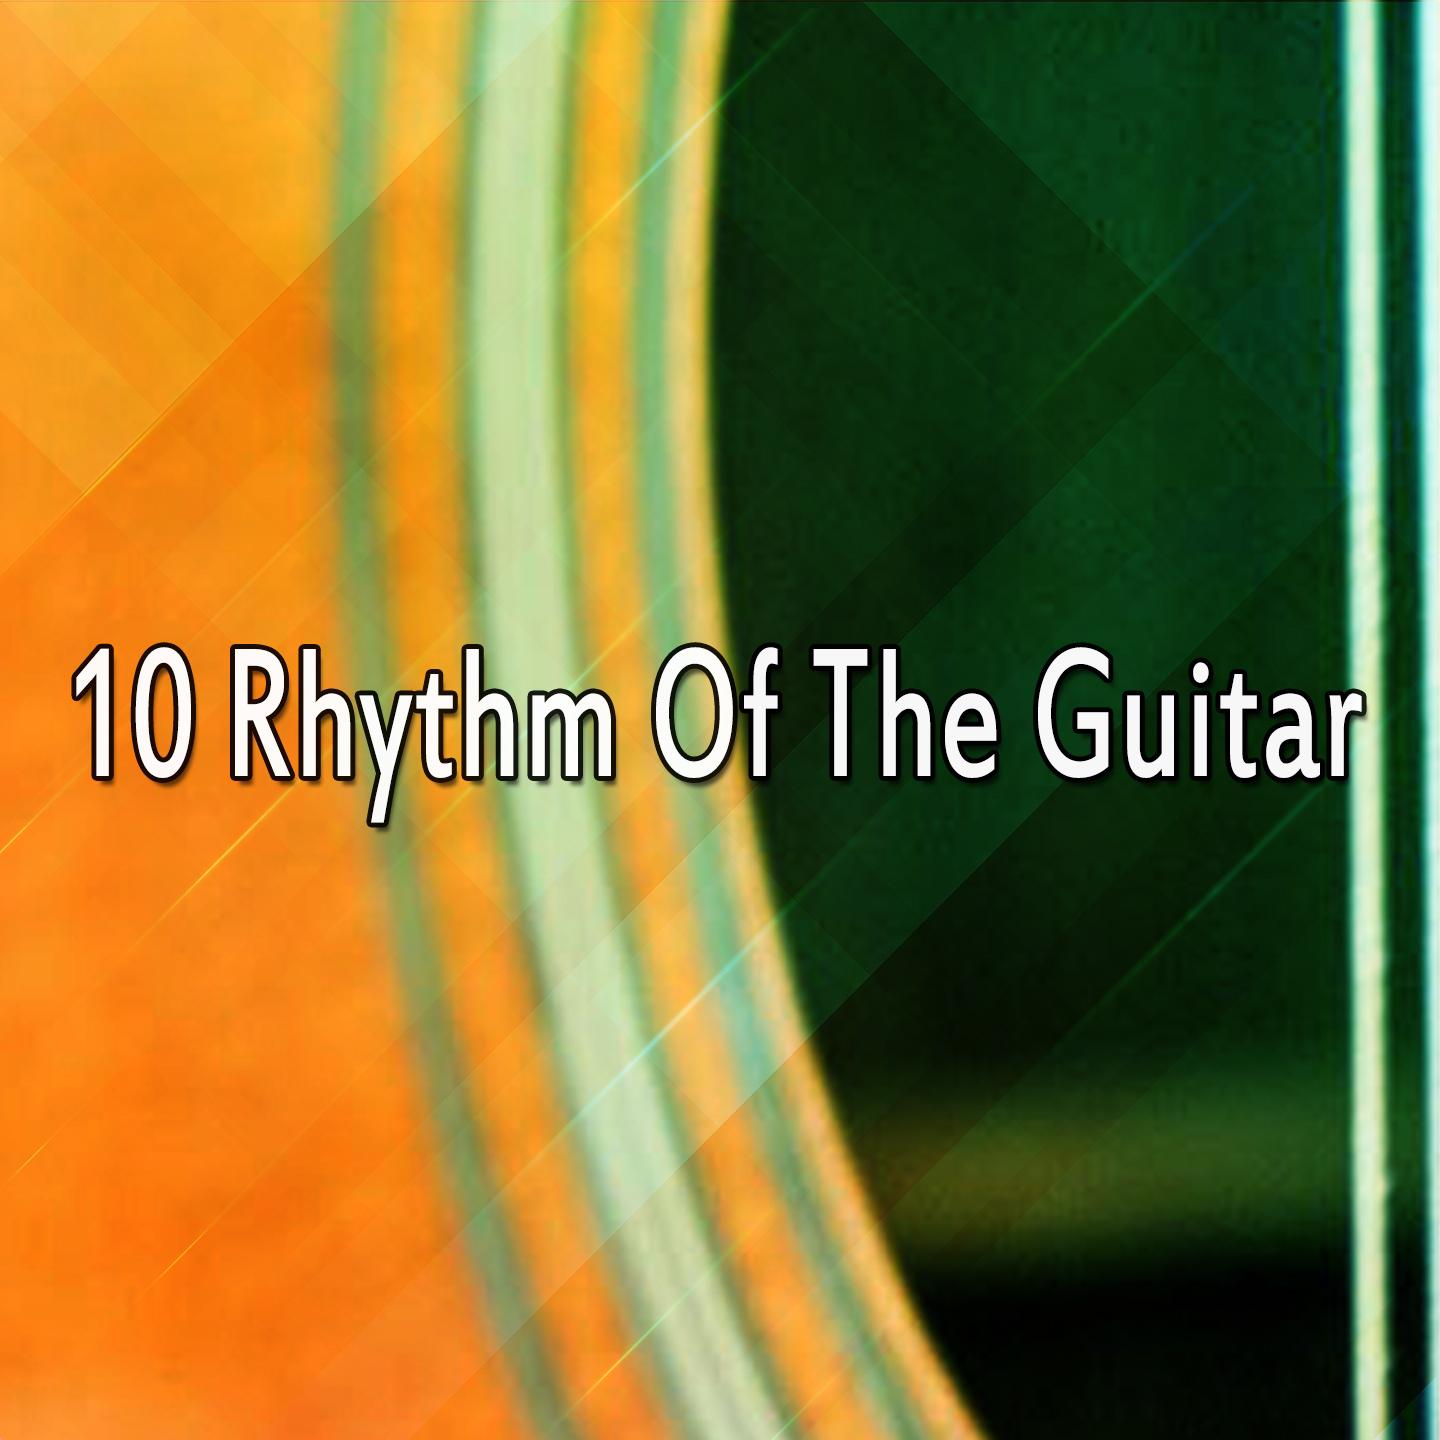 10 Rhythm Of The Guitar